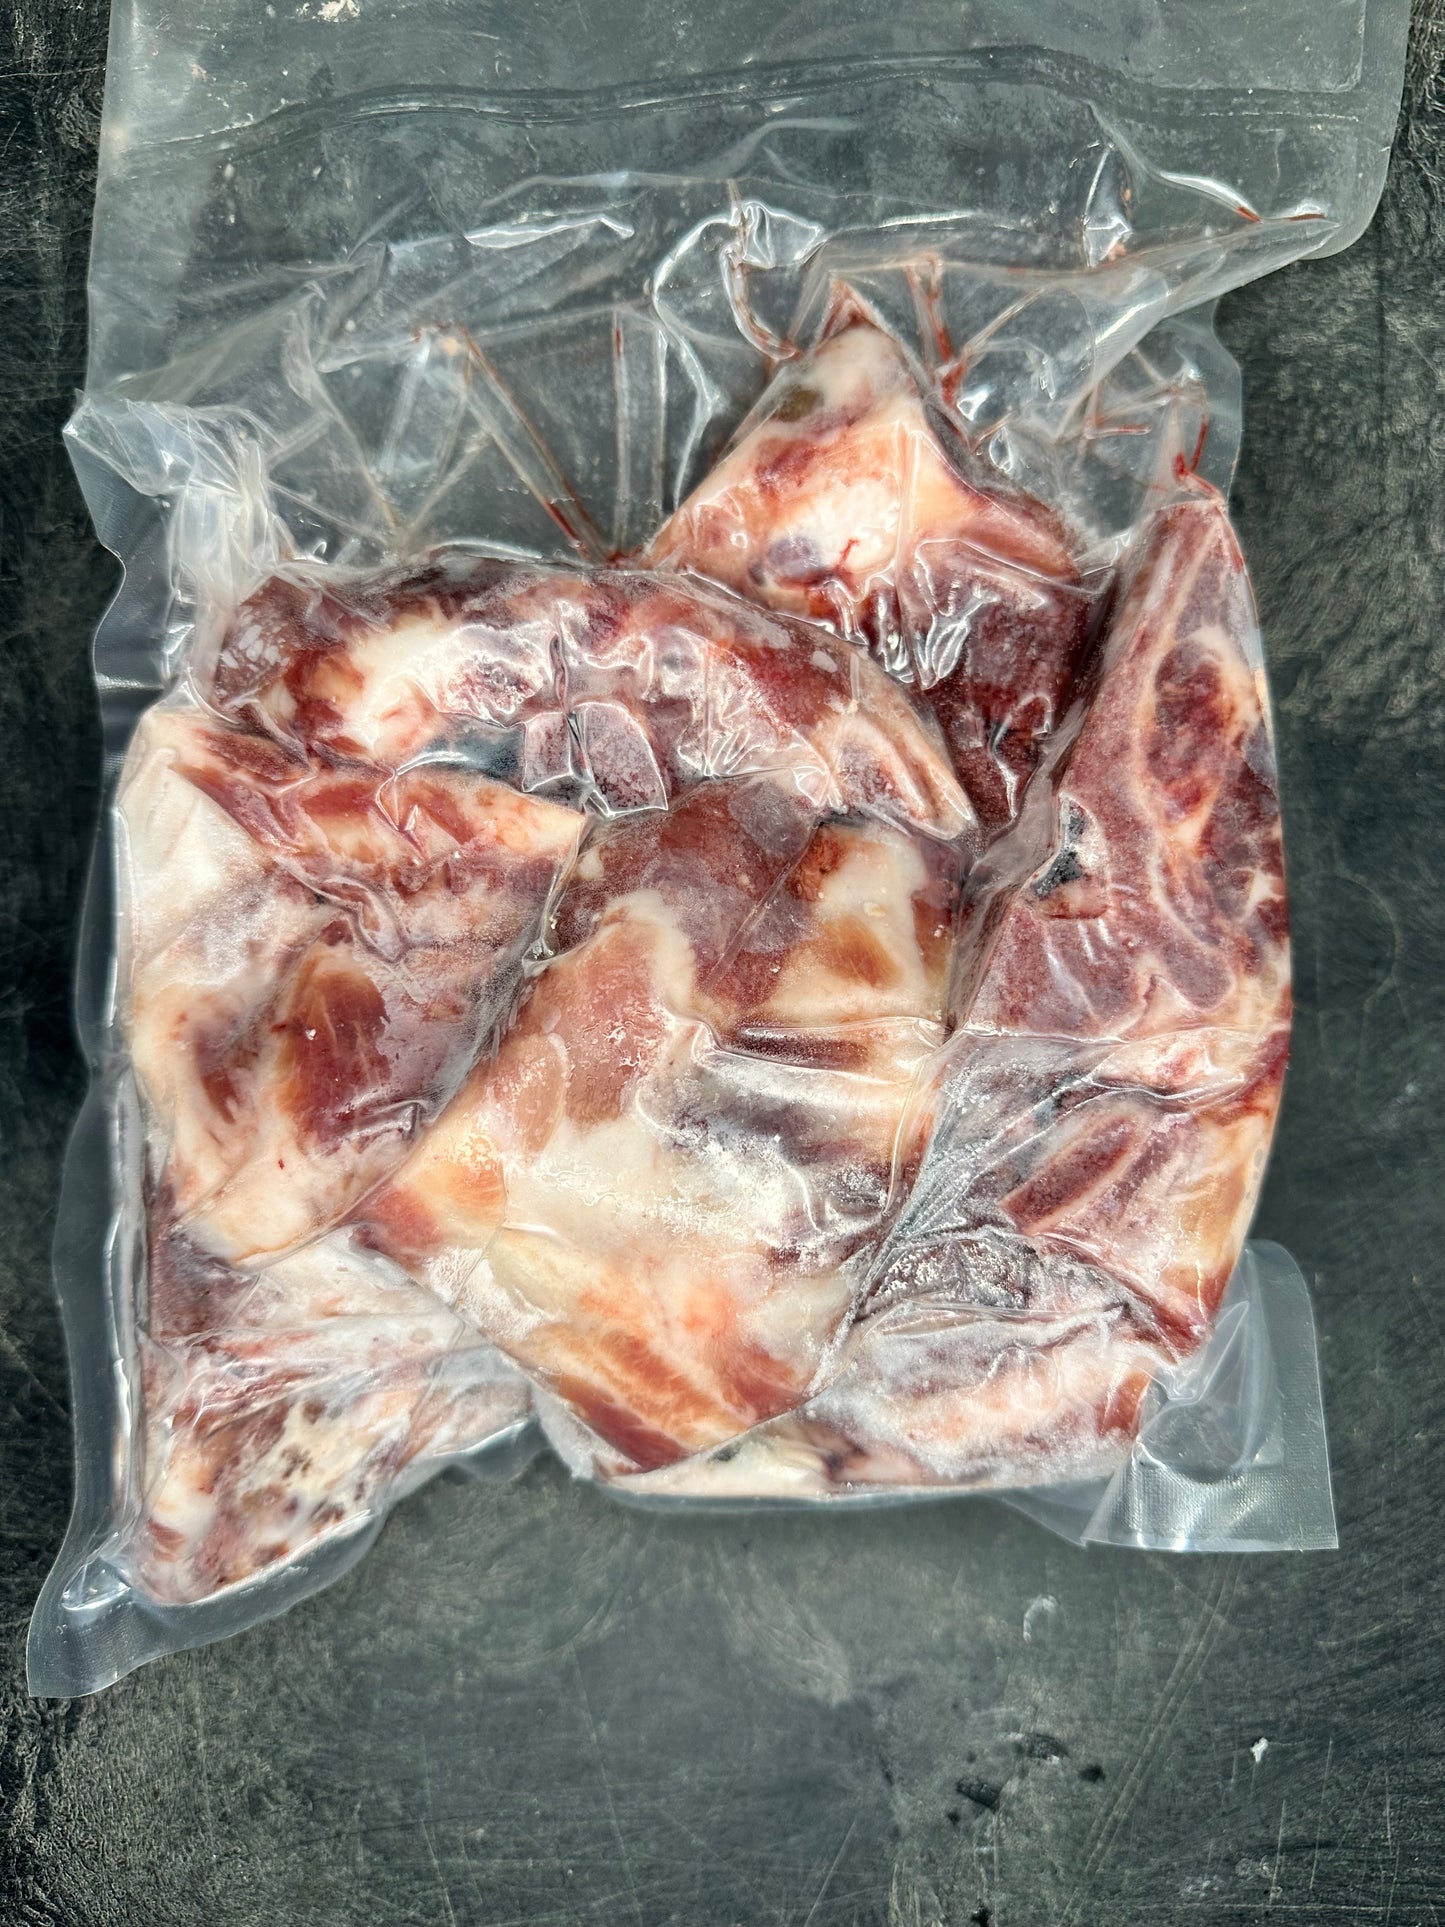 Pastured Pork Neck Bones (2-3lbs)